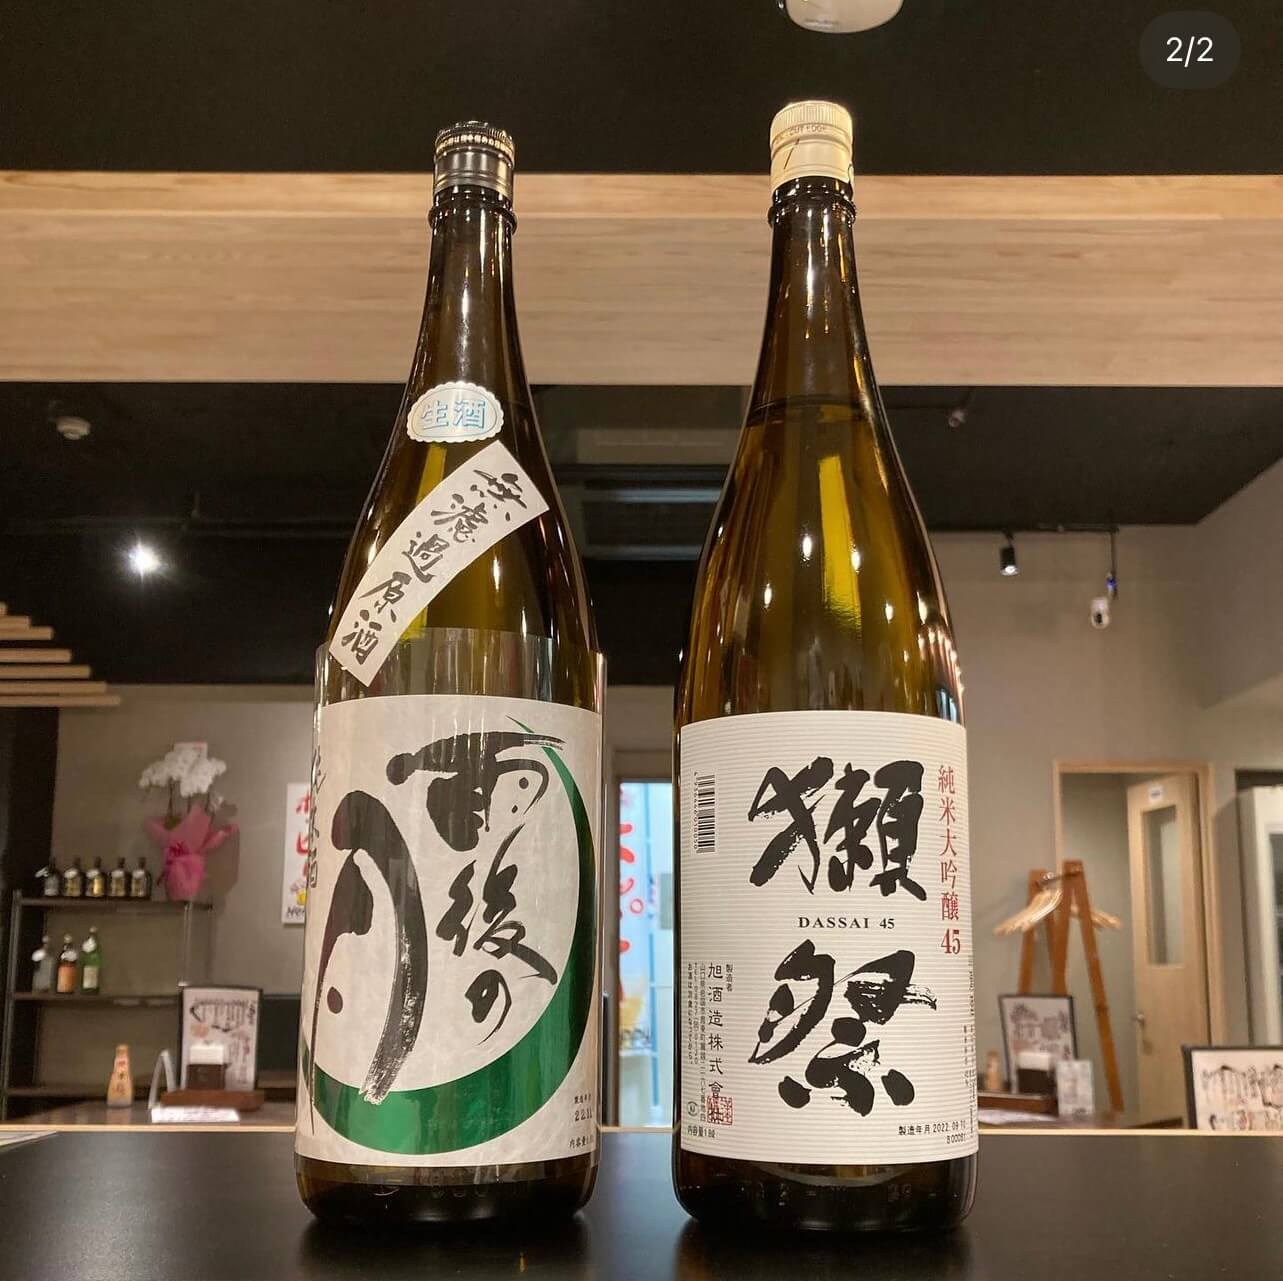 種類豊富な日本酒